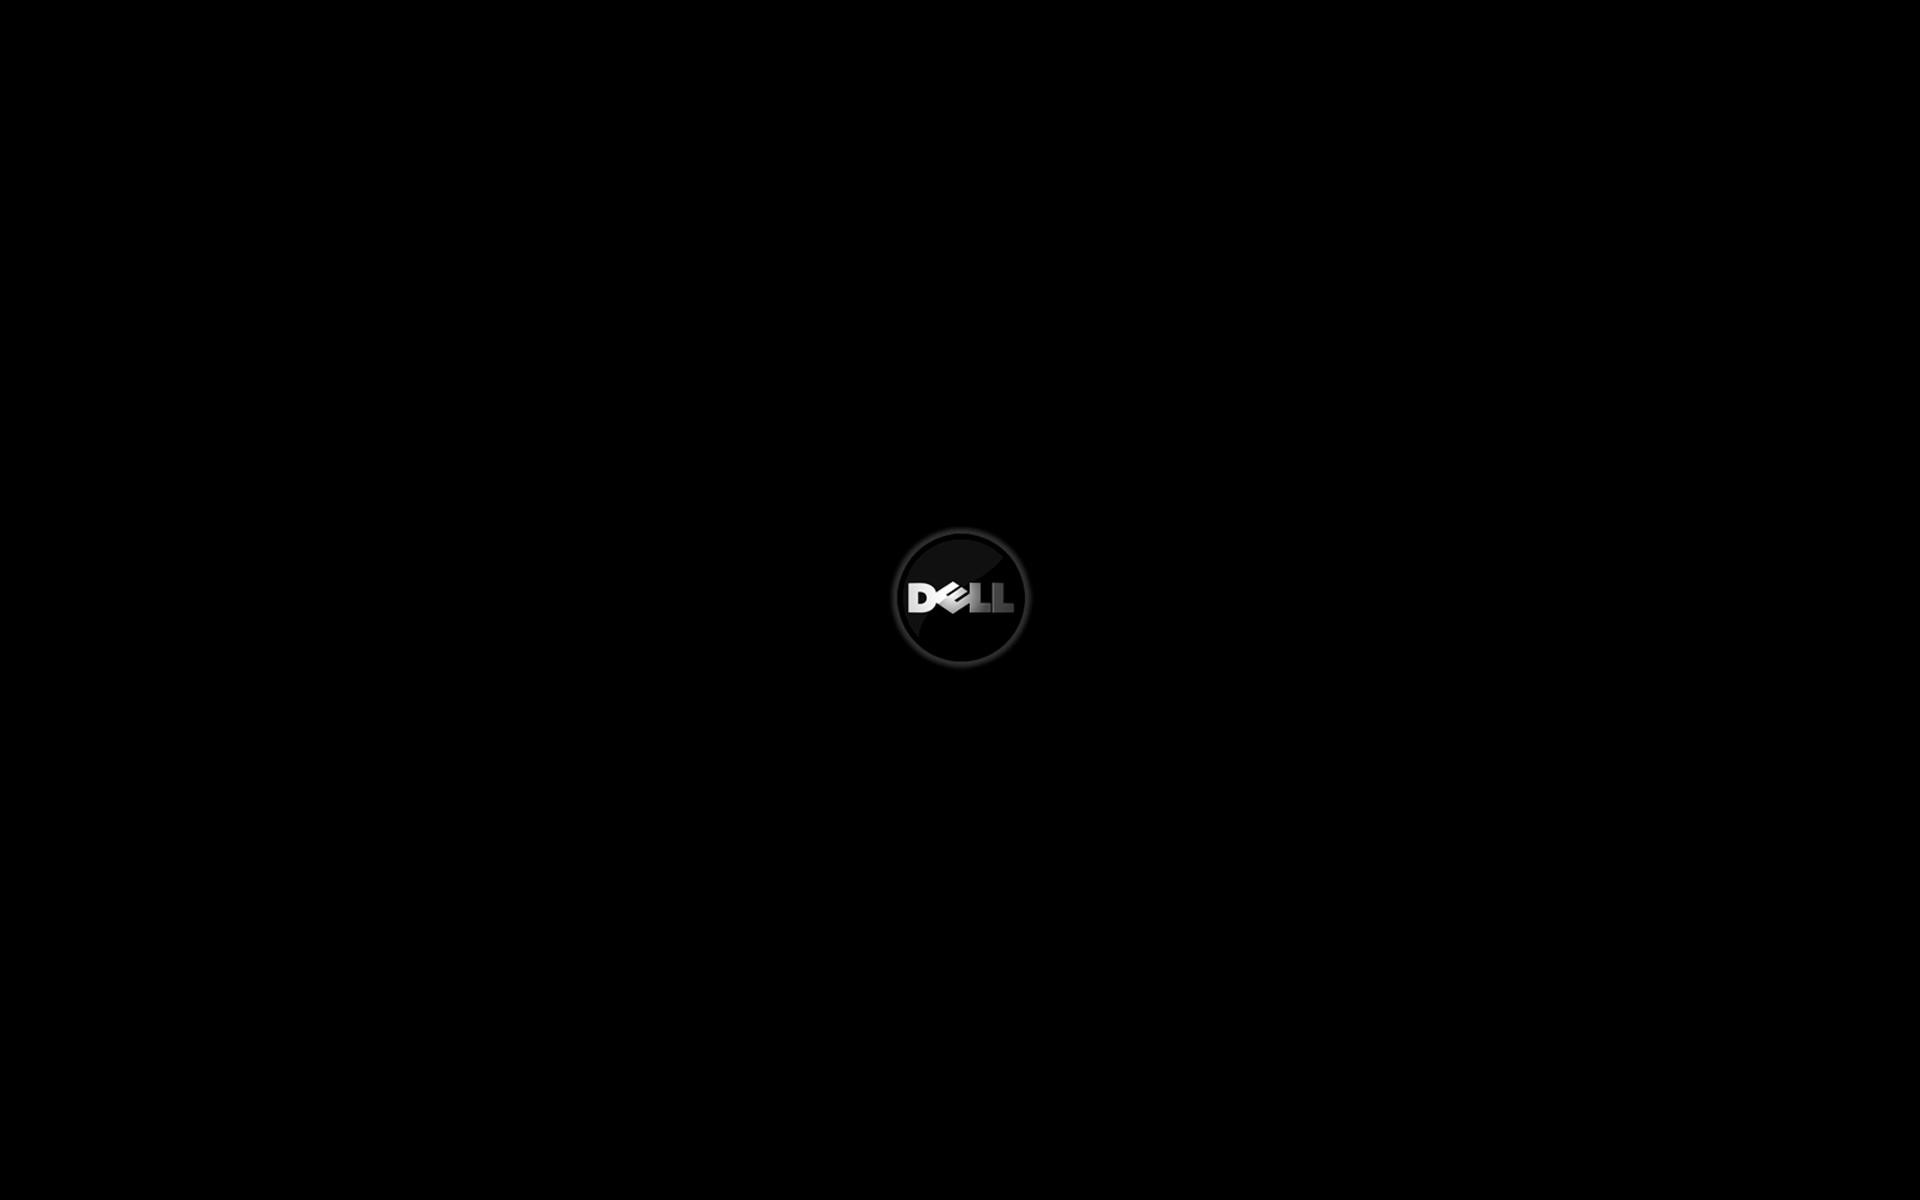 Dell Desktop Background Wallpapertag